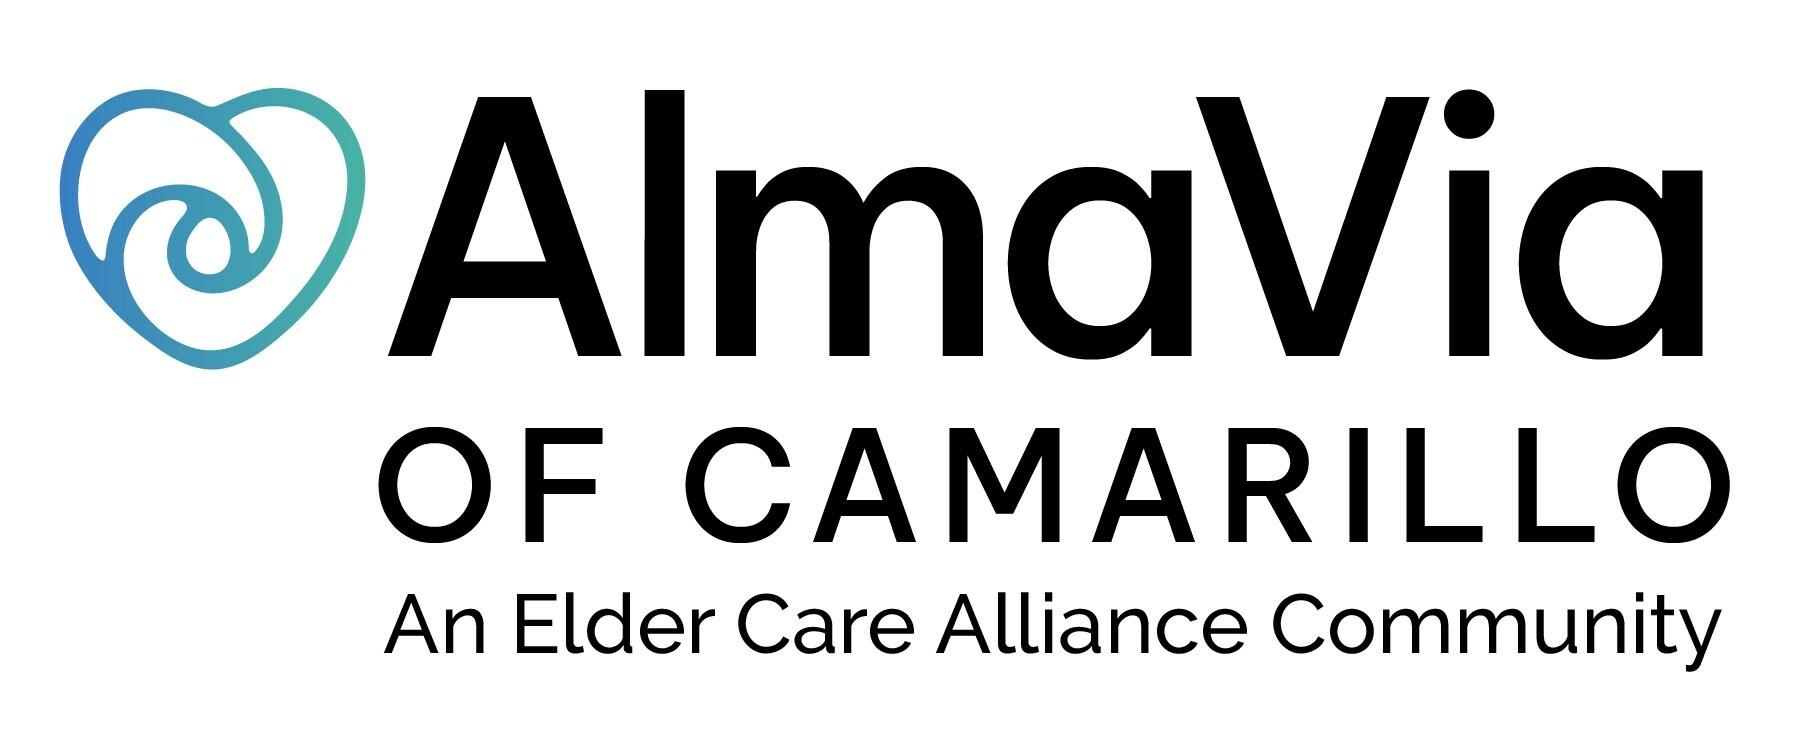 Elder Care Alliance Communities Among Best Again by U.S. News & World Report